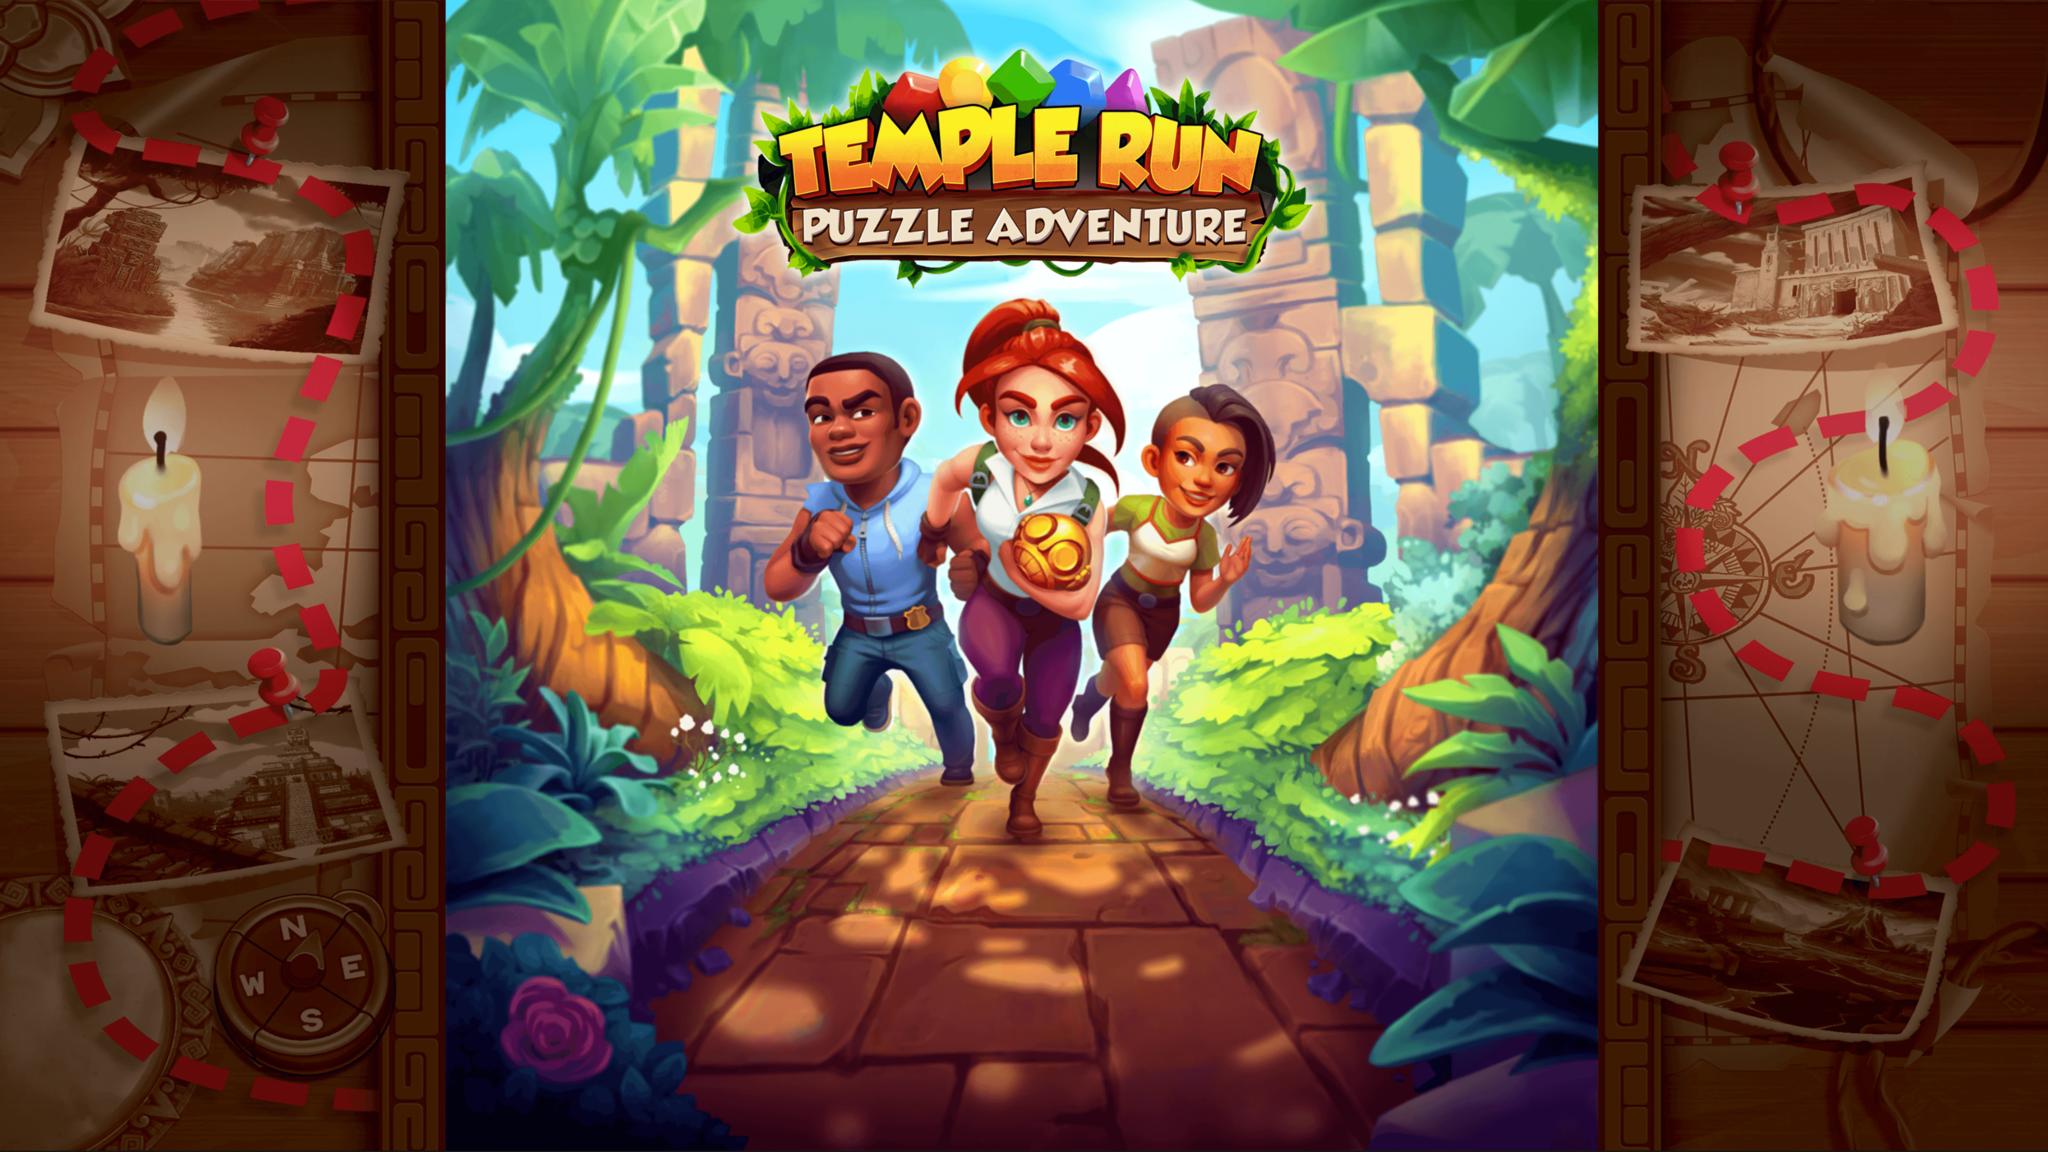 Temple Run: Puzzle Adventure sprints into Apple Arcade this Friday